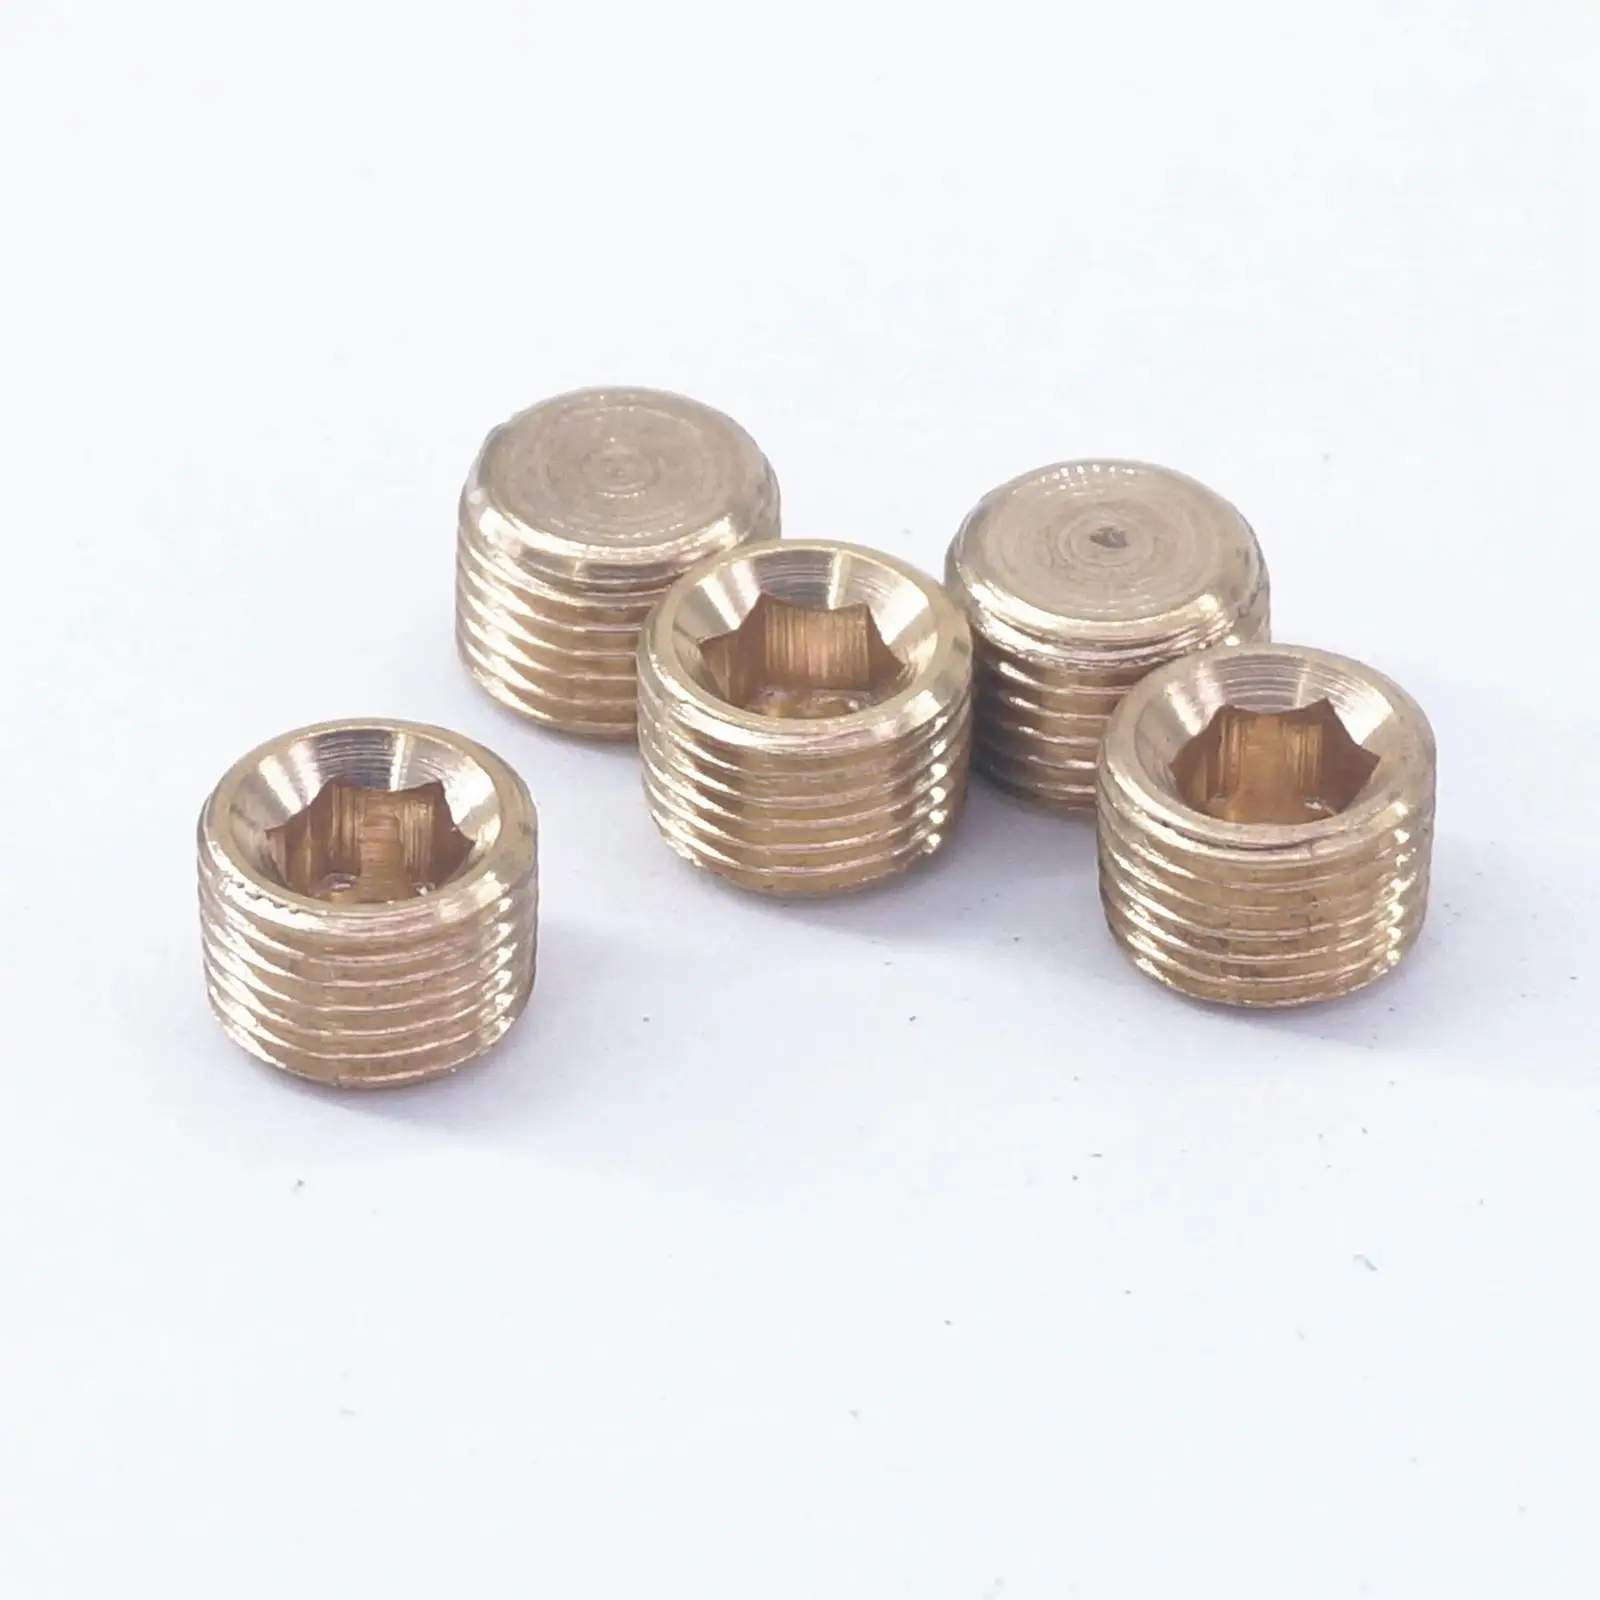 Sorekarain Lot10 3/8 Bsp Male Brass Countersunk Plug Internal Hex Head Socket Pipe Fitting 